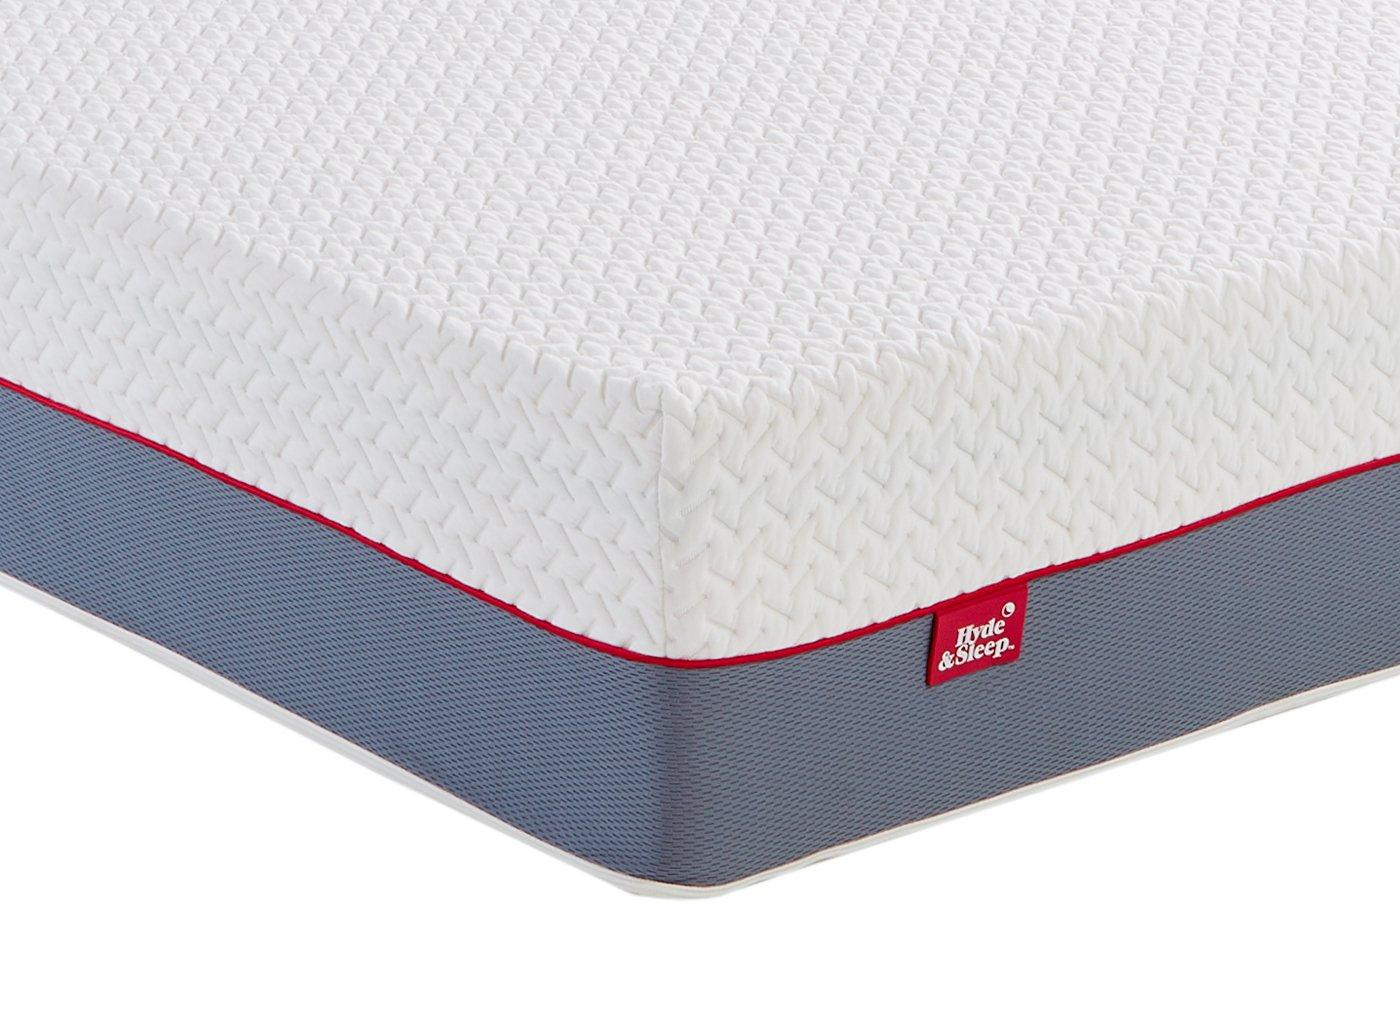 hyde and sleep raspberry mattress review